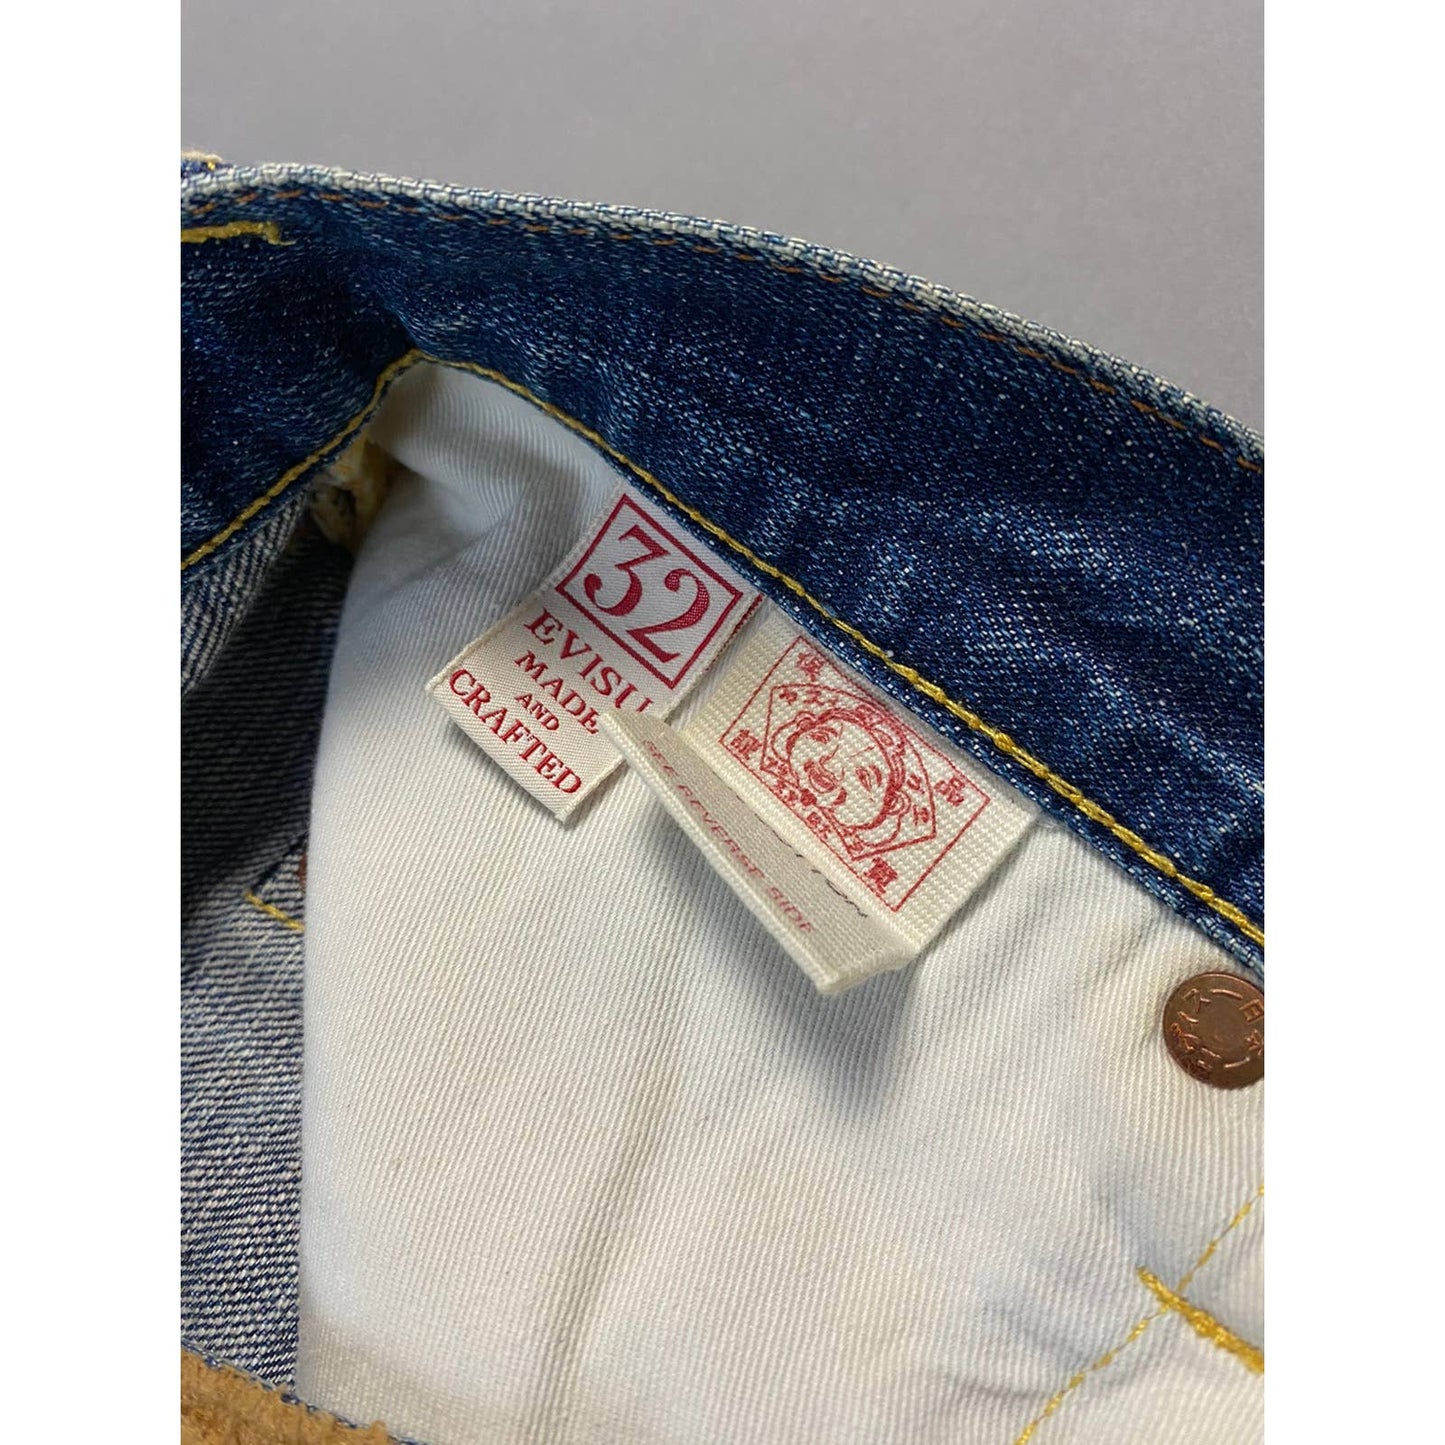 Evisu jeans daicock vintage selvedge denim Paris big logo